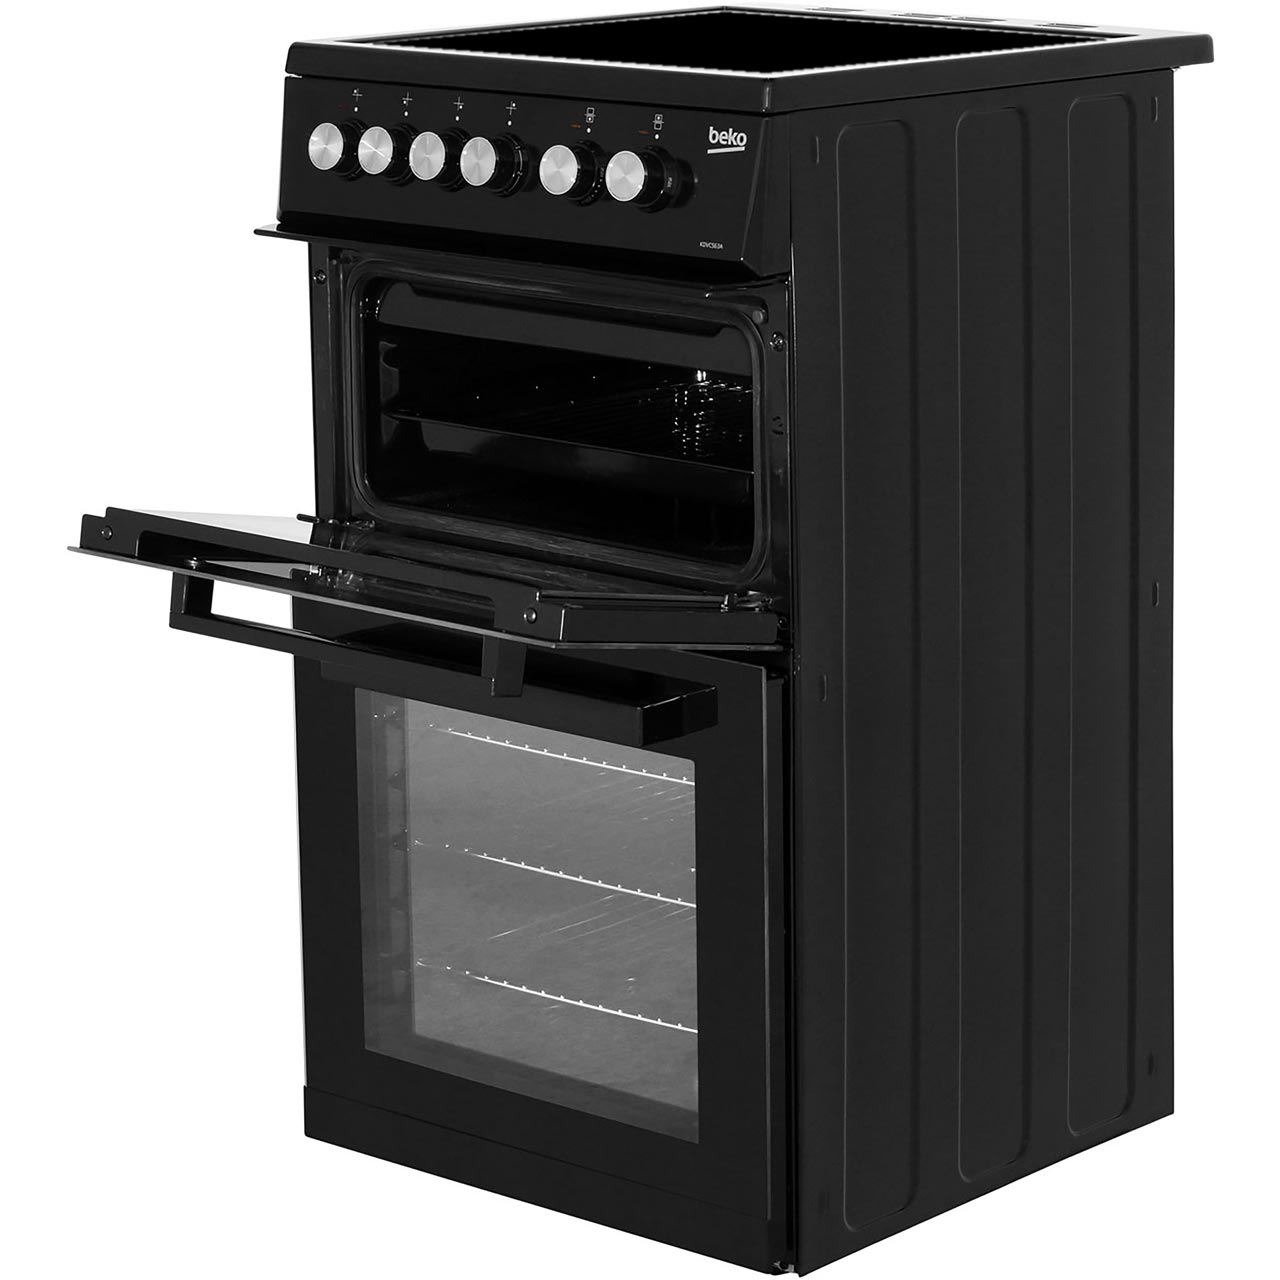 Beko KDVC563AK Free Standing A/A Electric Cooker with Ceramic Hob 50cm Black 5023790043700 | eBay